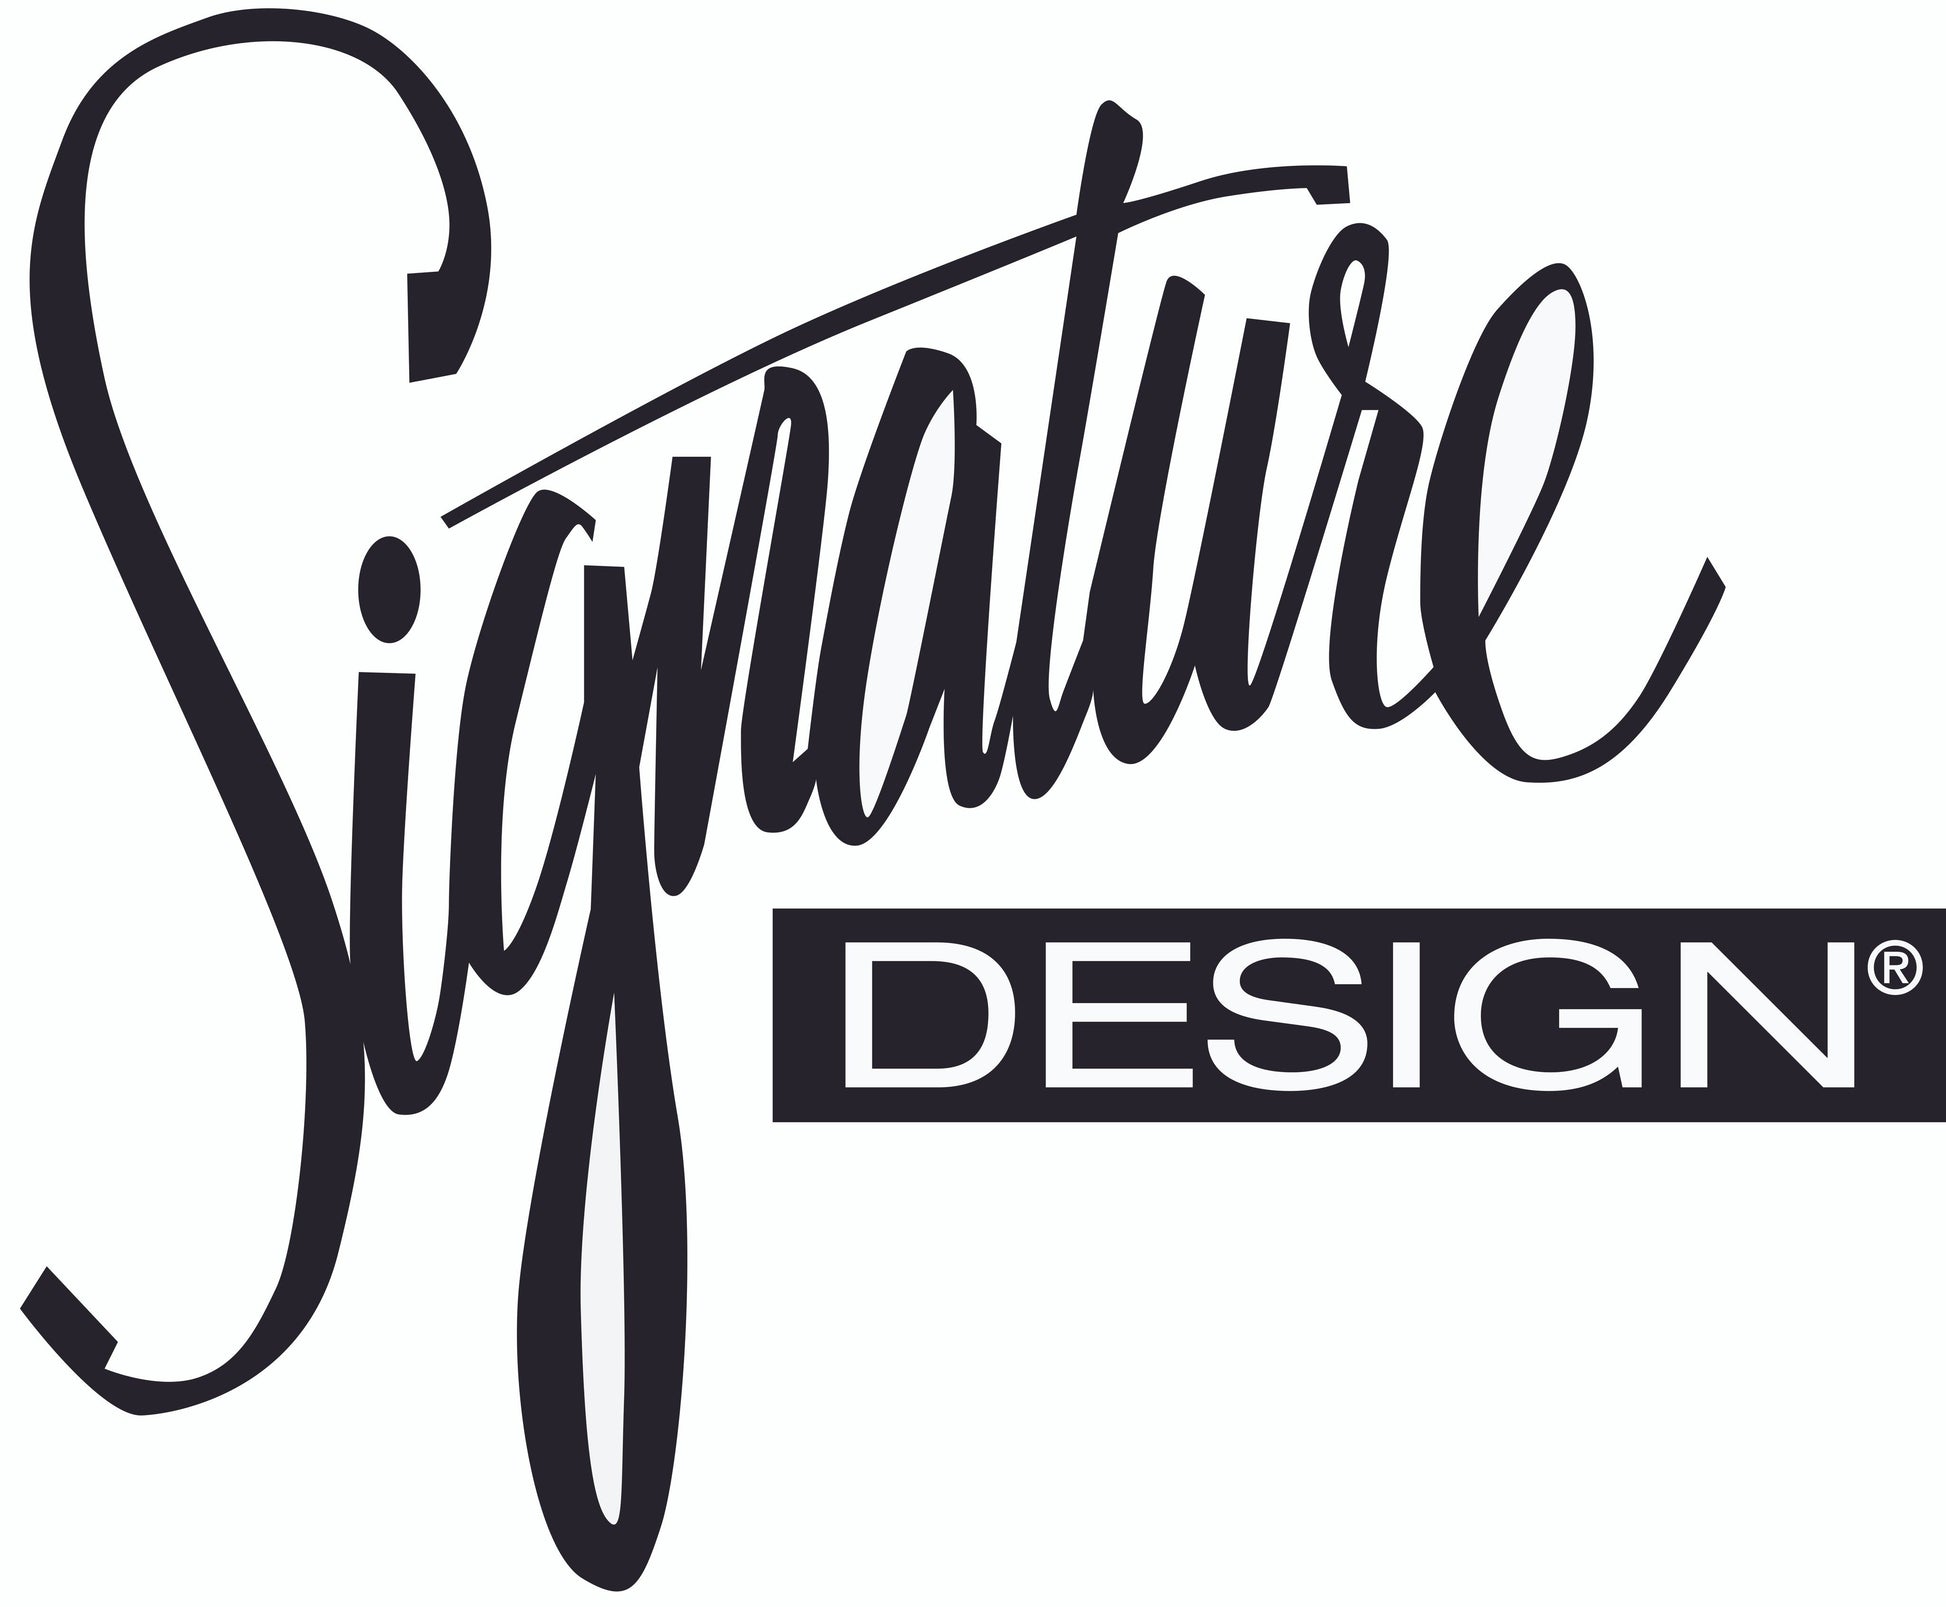 Maderla Sofa Signature Design by Ashley®